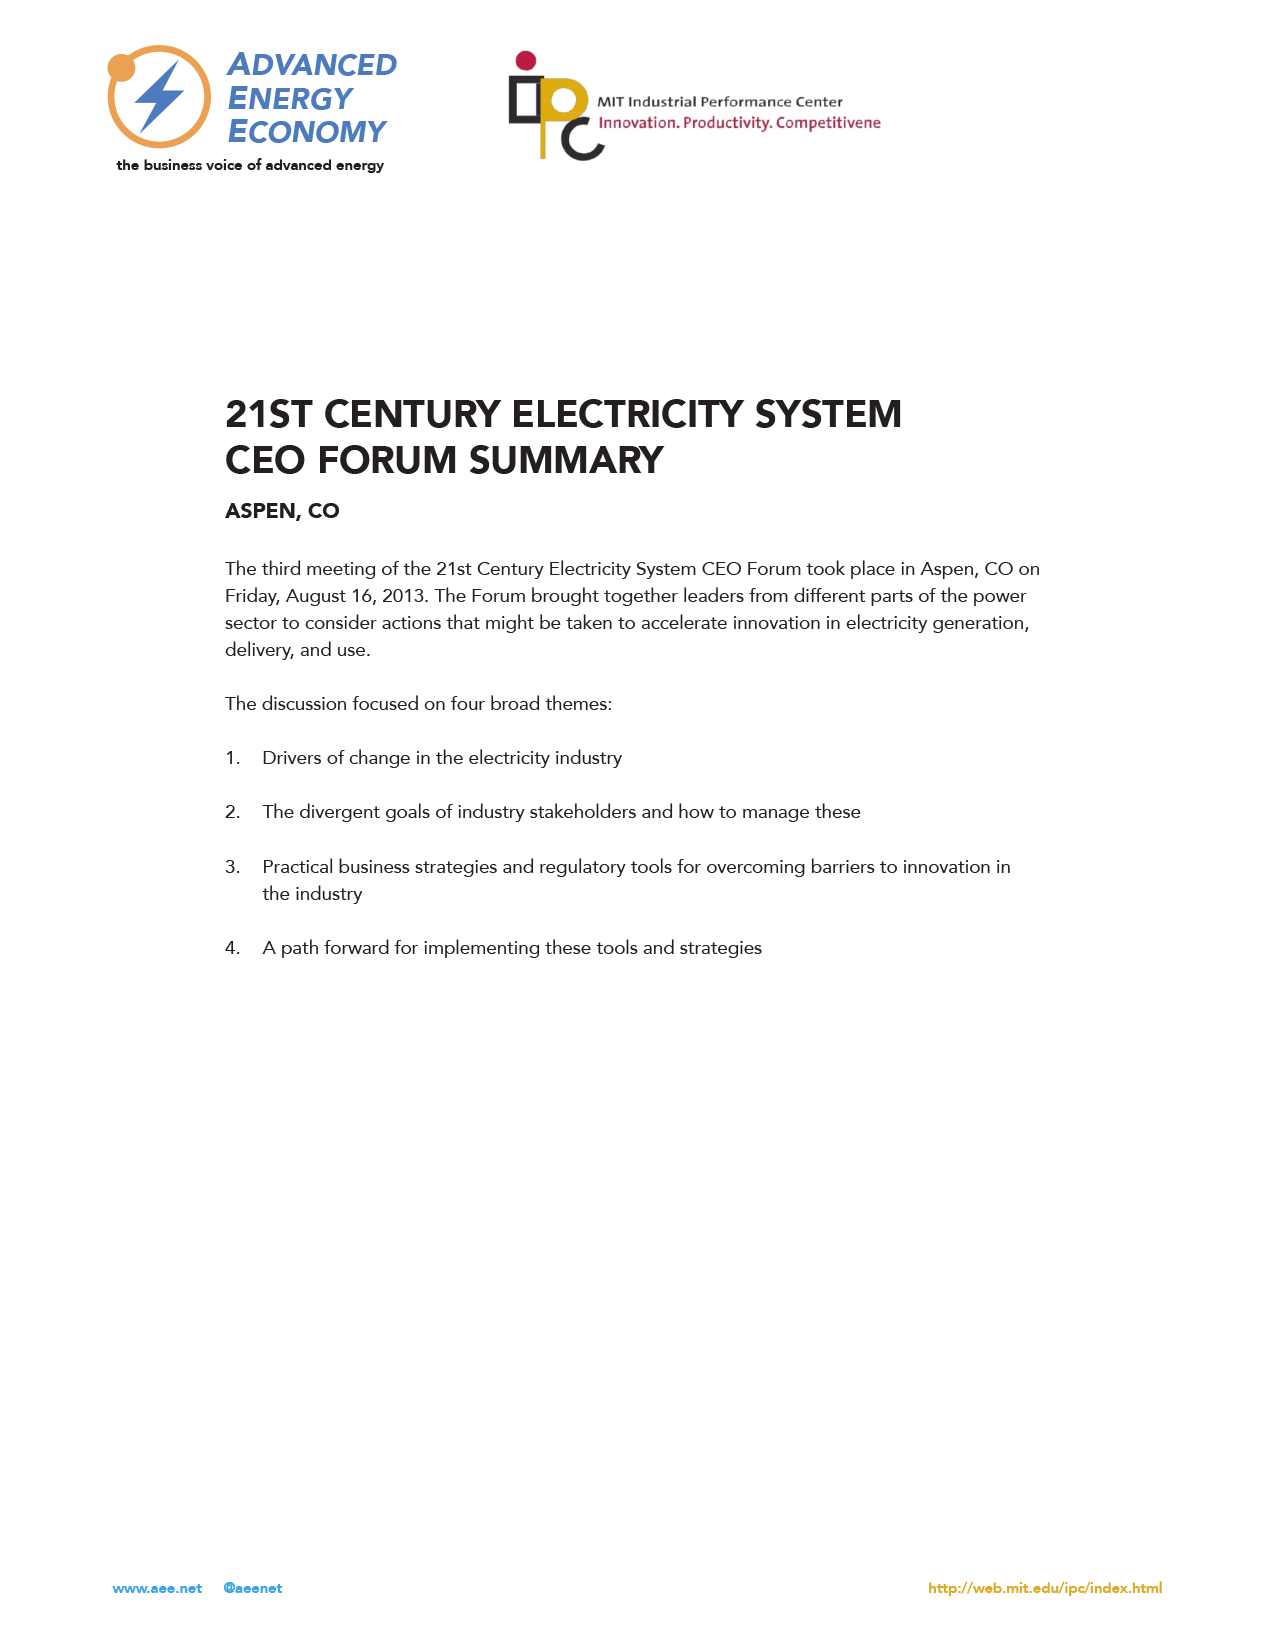 21st Century Electricity System CEO Forum - Aspen, CO